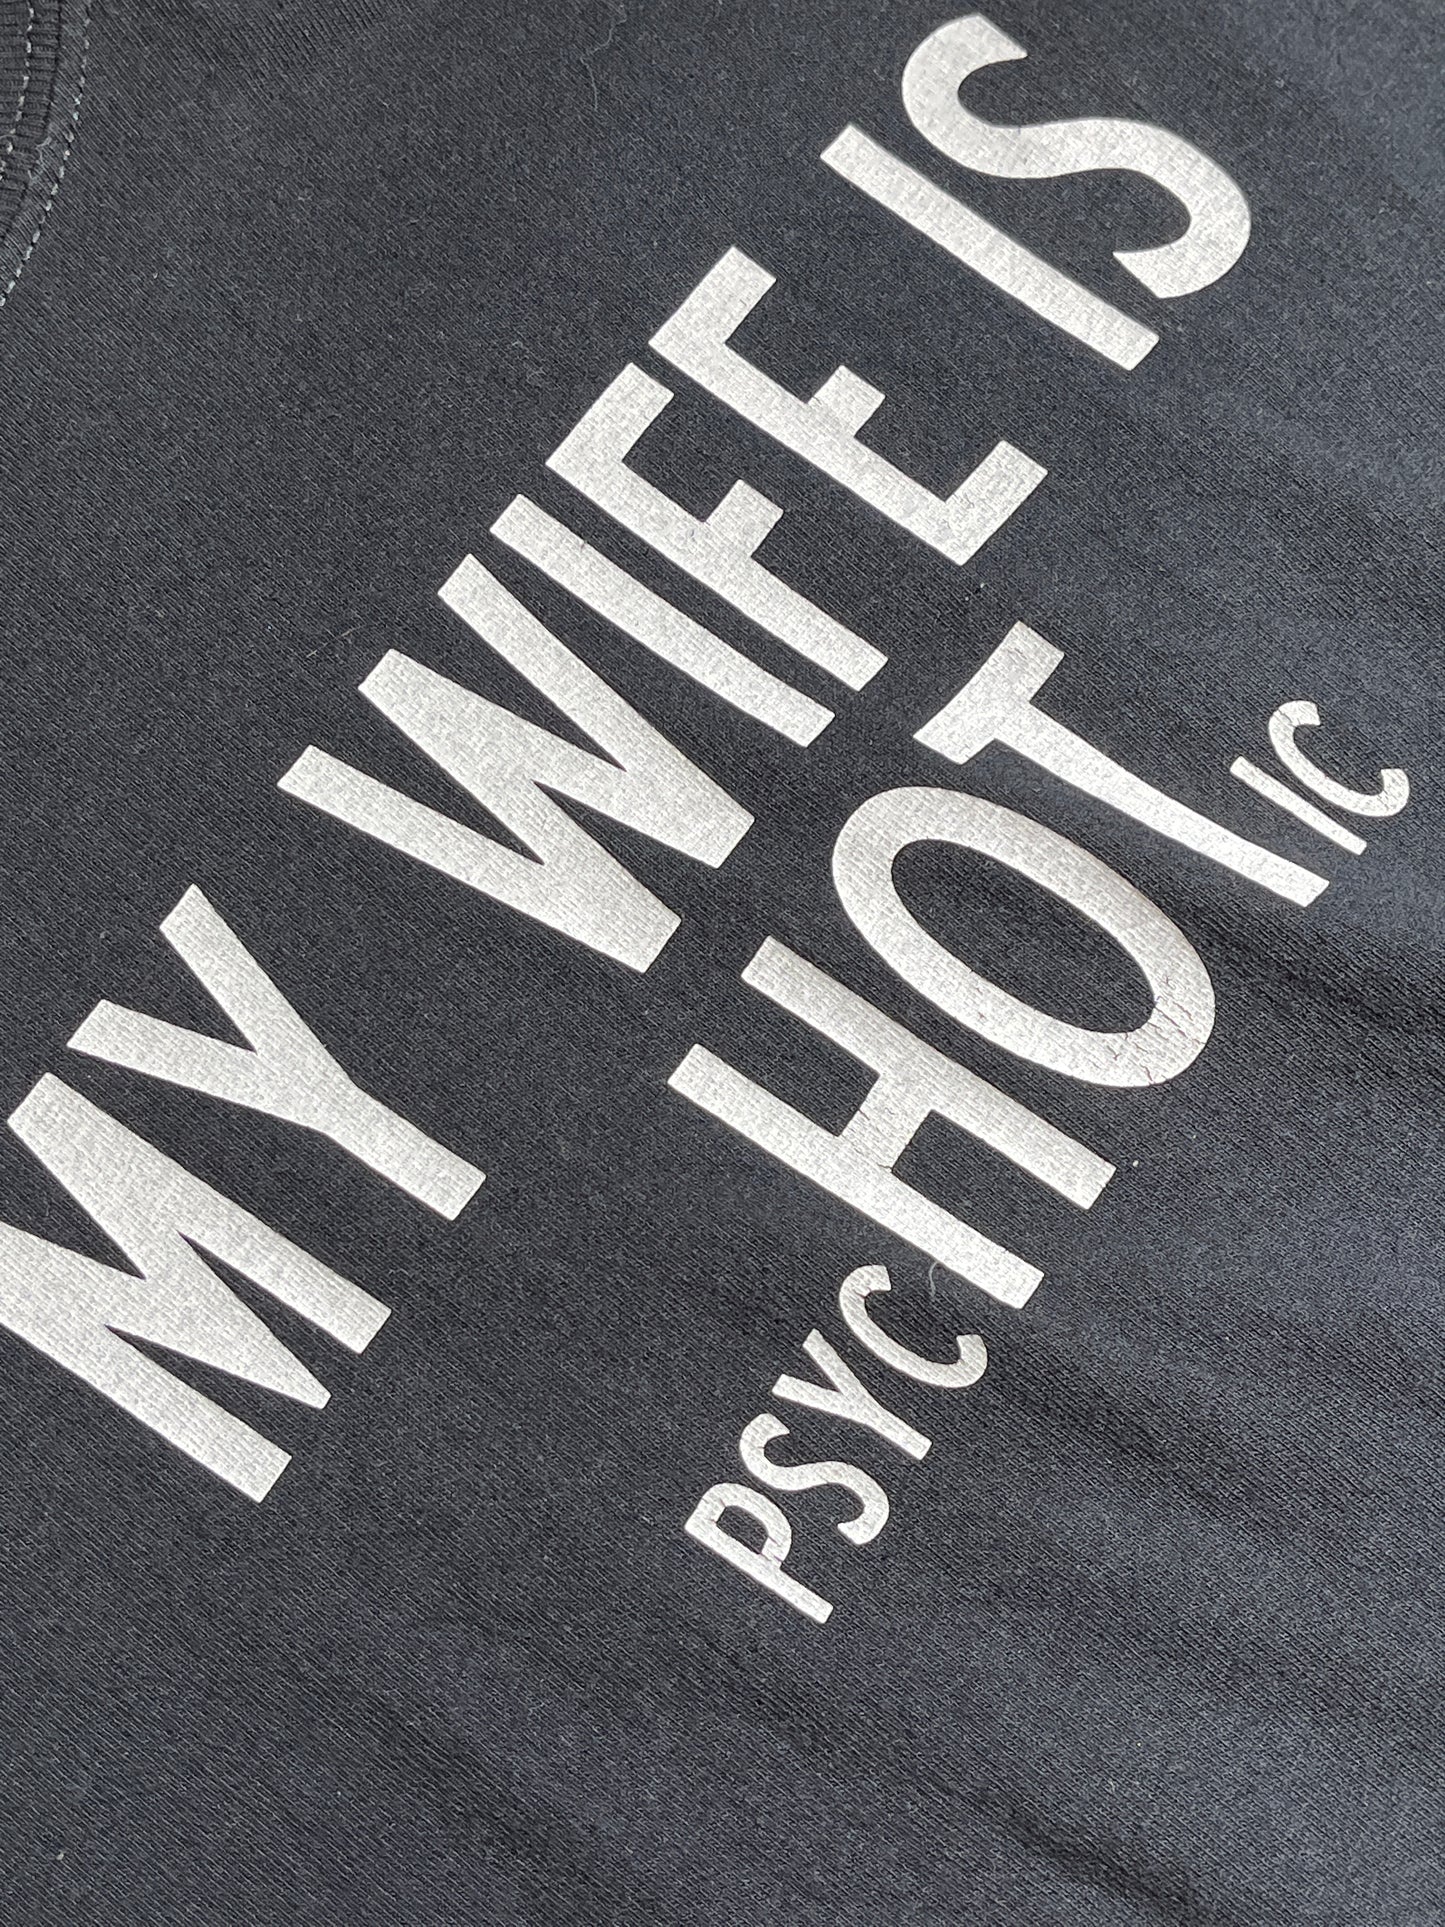 Vintage My Wife Is psycHOTic T-Shirt Slogan Lol